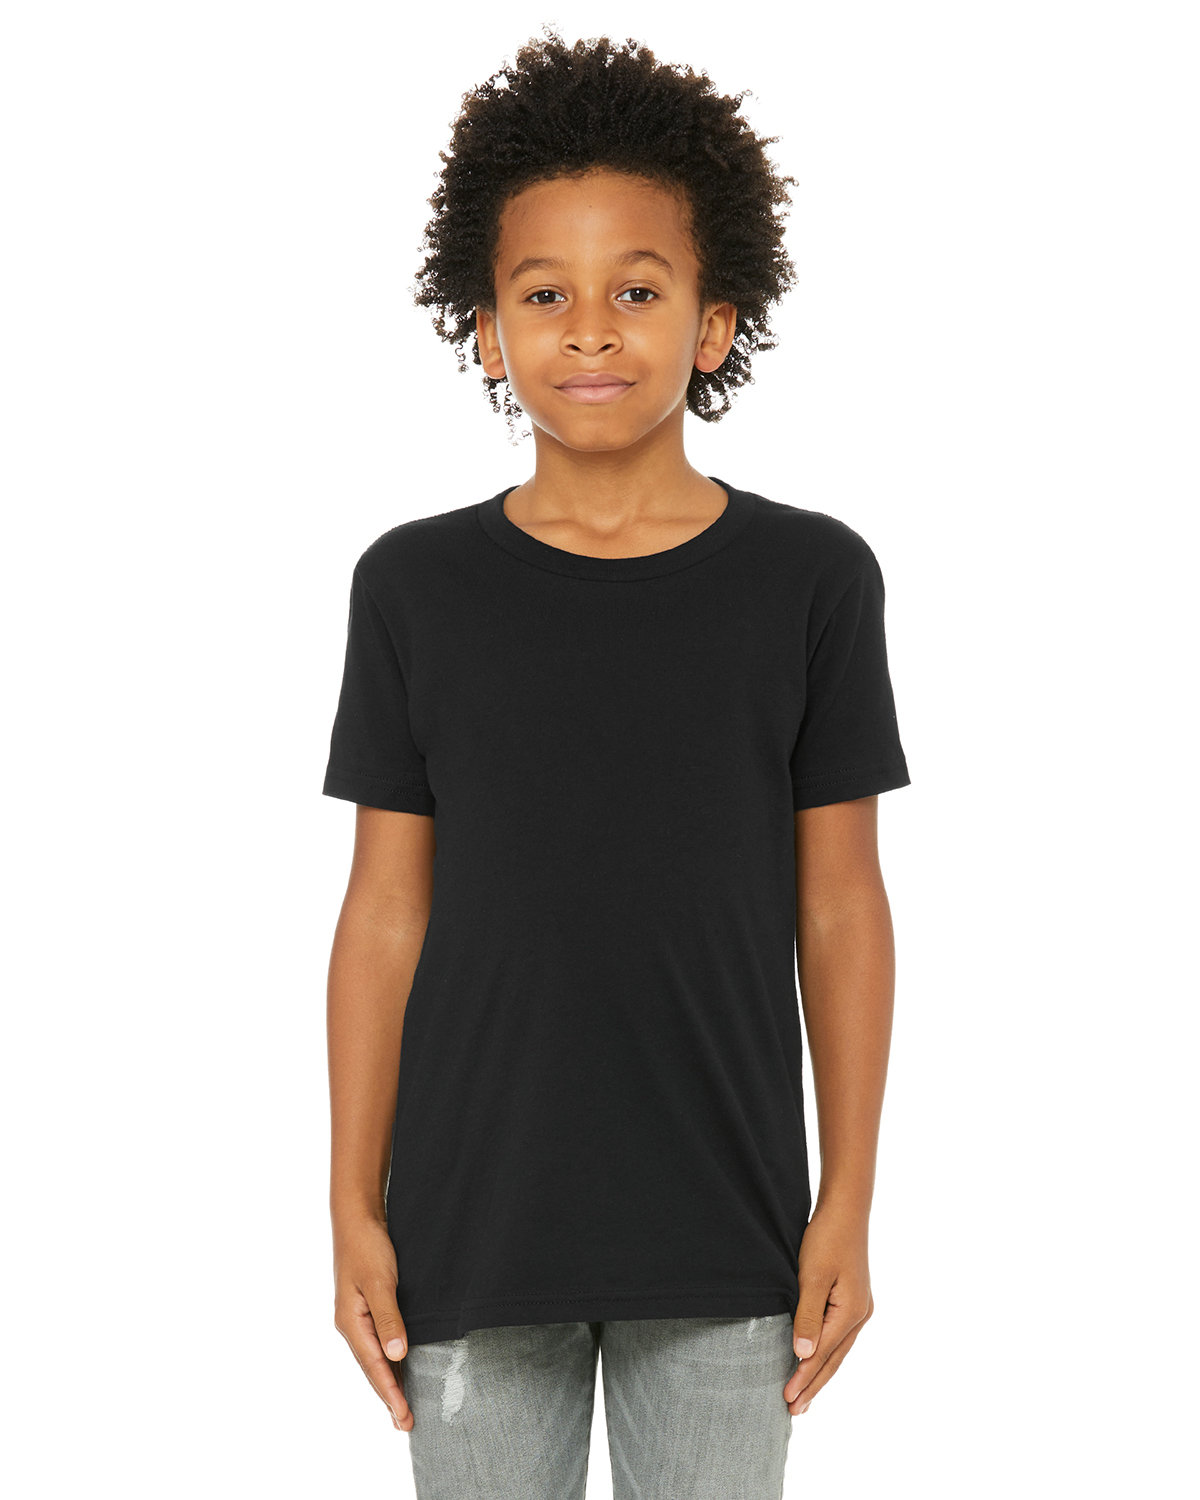 Bella + Canvas Youth Jersey T-Shirt BLACK 